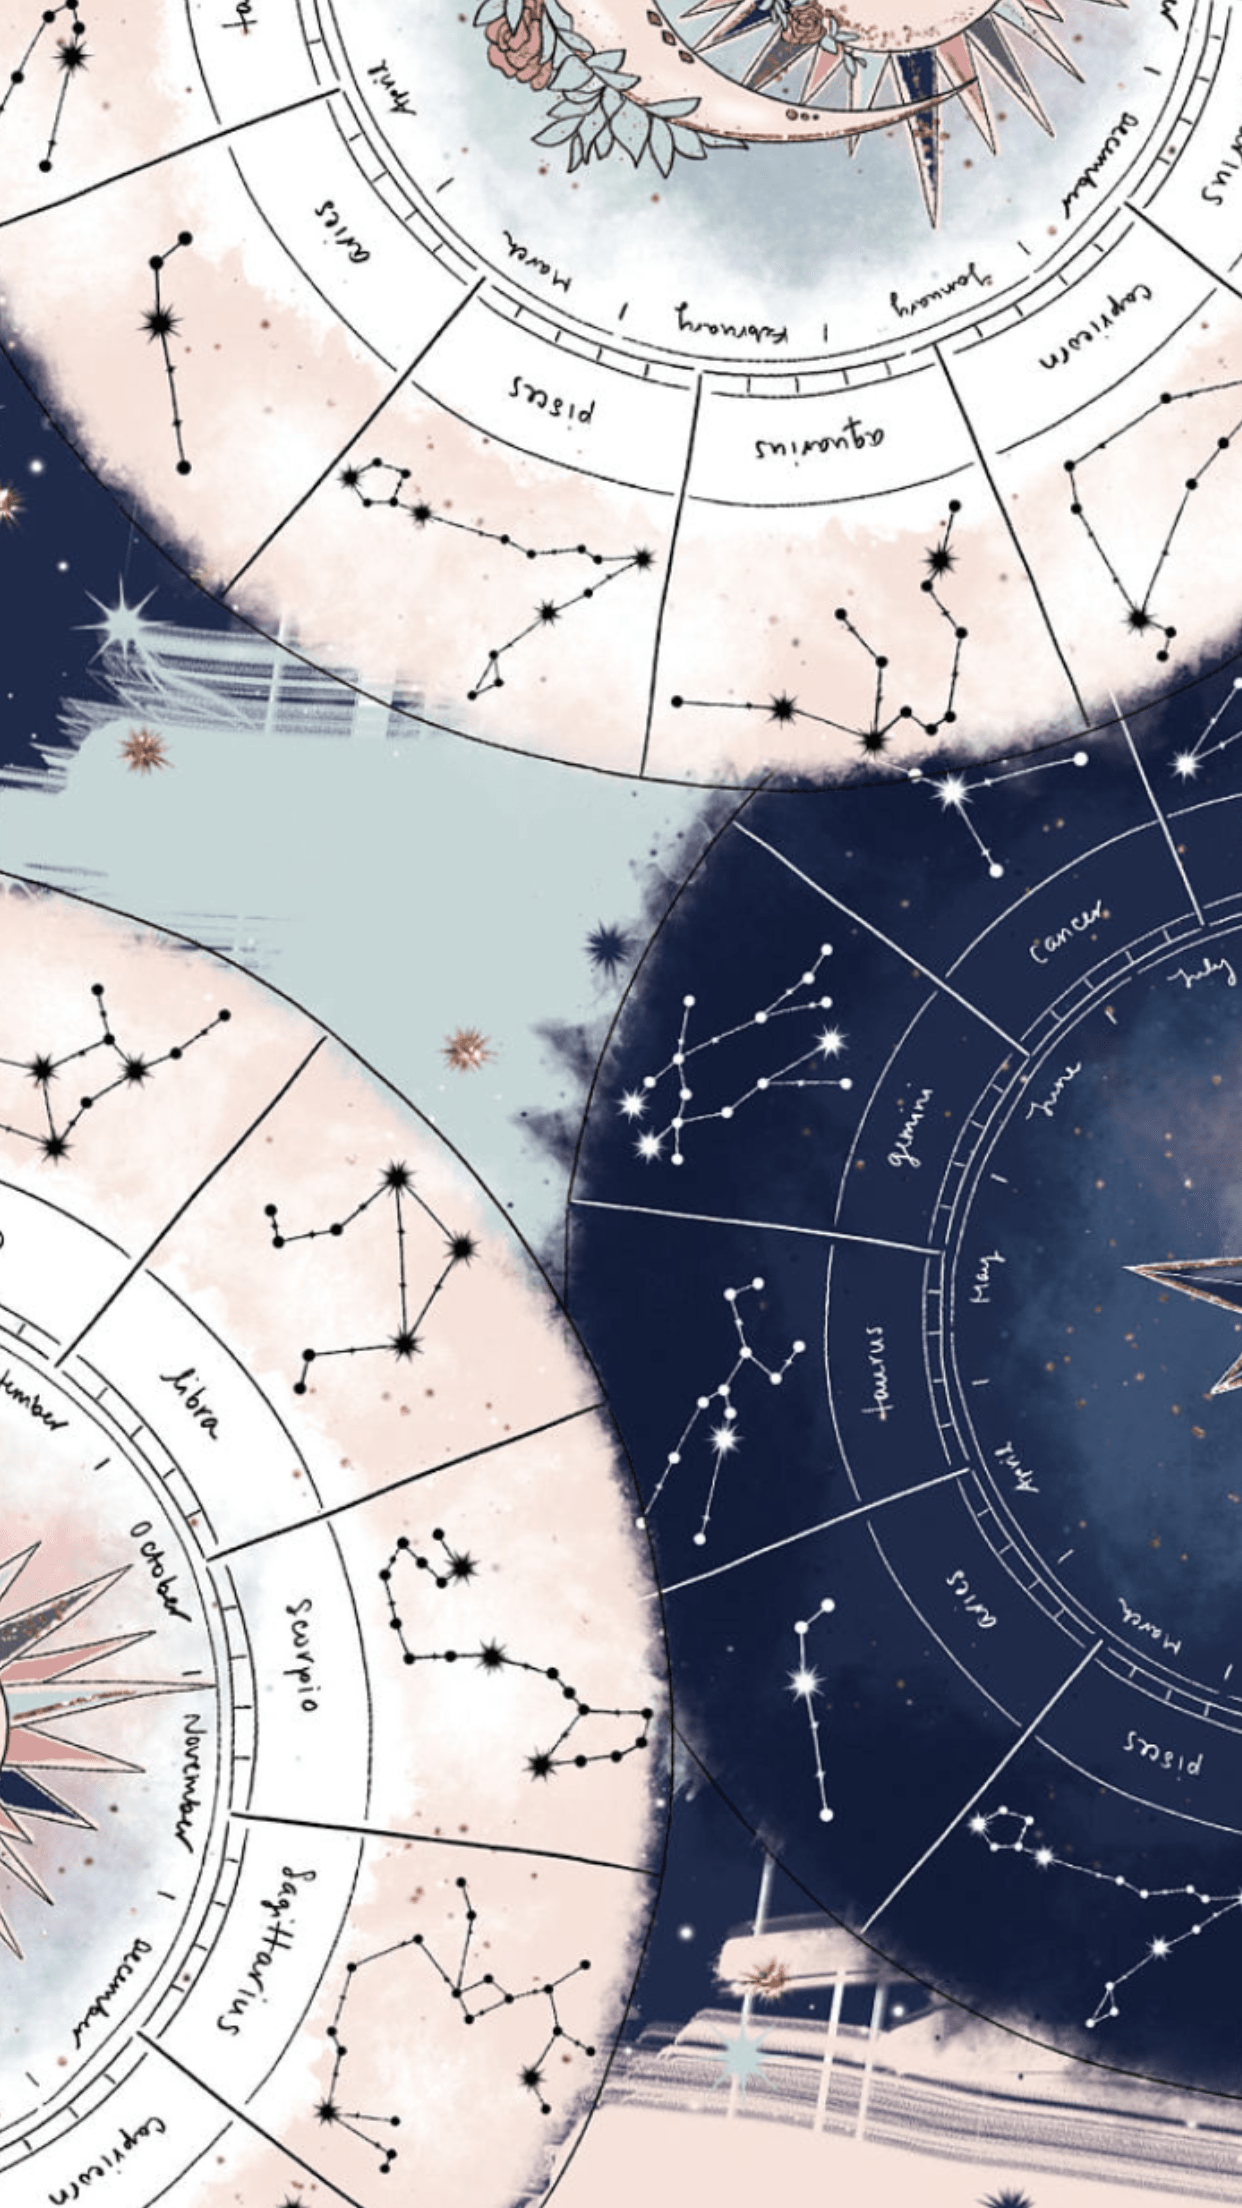 A celestial chart with the zodiac signs - Pisces, Capricorn, Aries, Sagittarius, Aquarius, Libra, Cancer, constellation